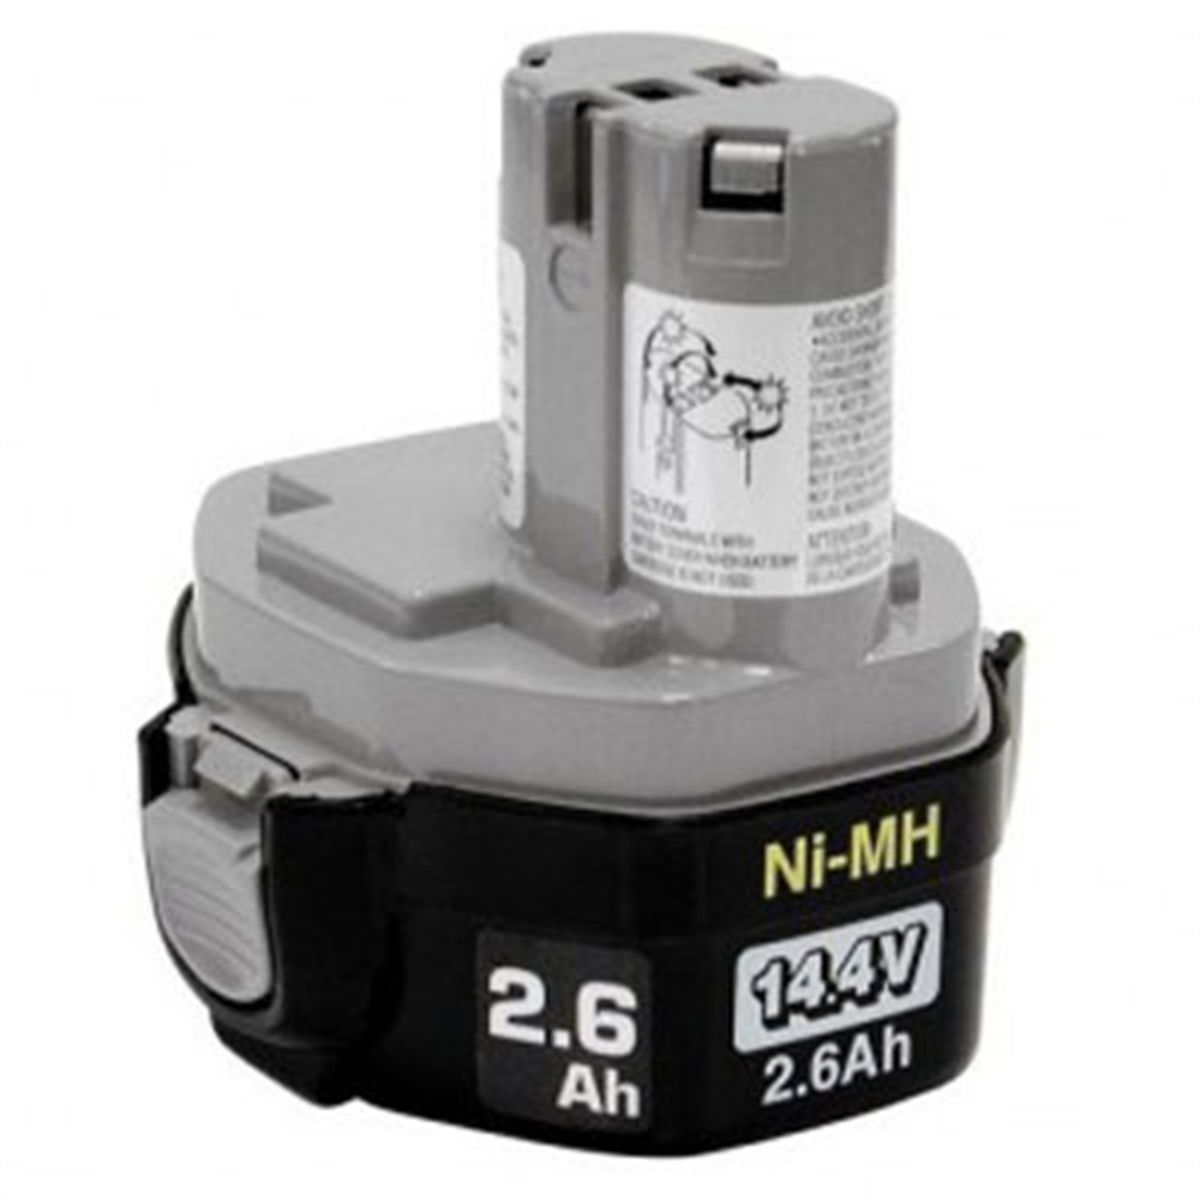 Nickel-Metal Hydride (NiMH) Battery 1434 - 14.4V (2.6 Ah)